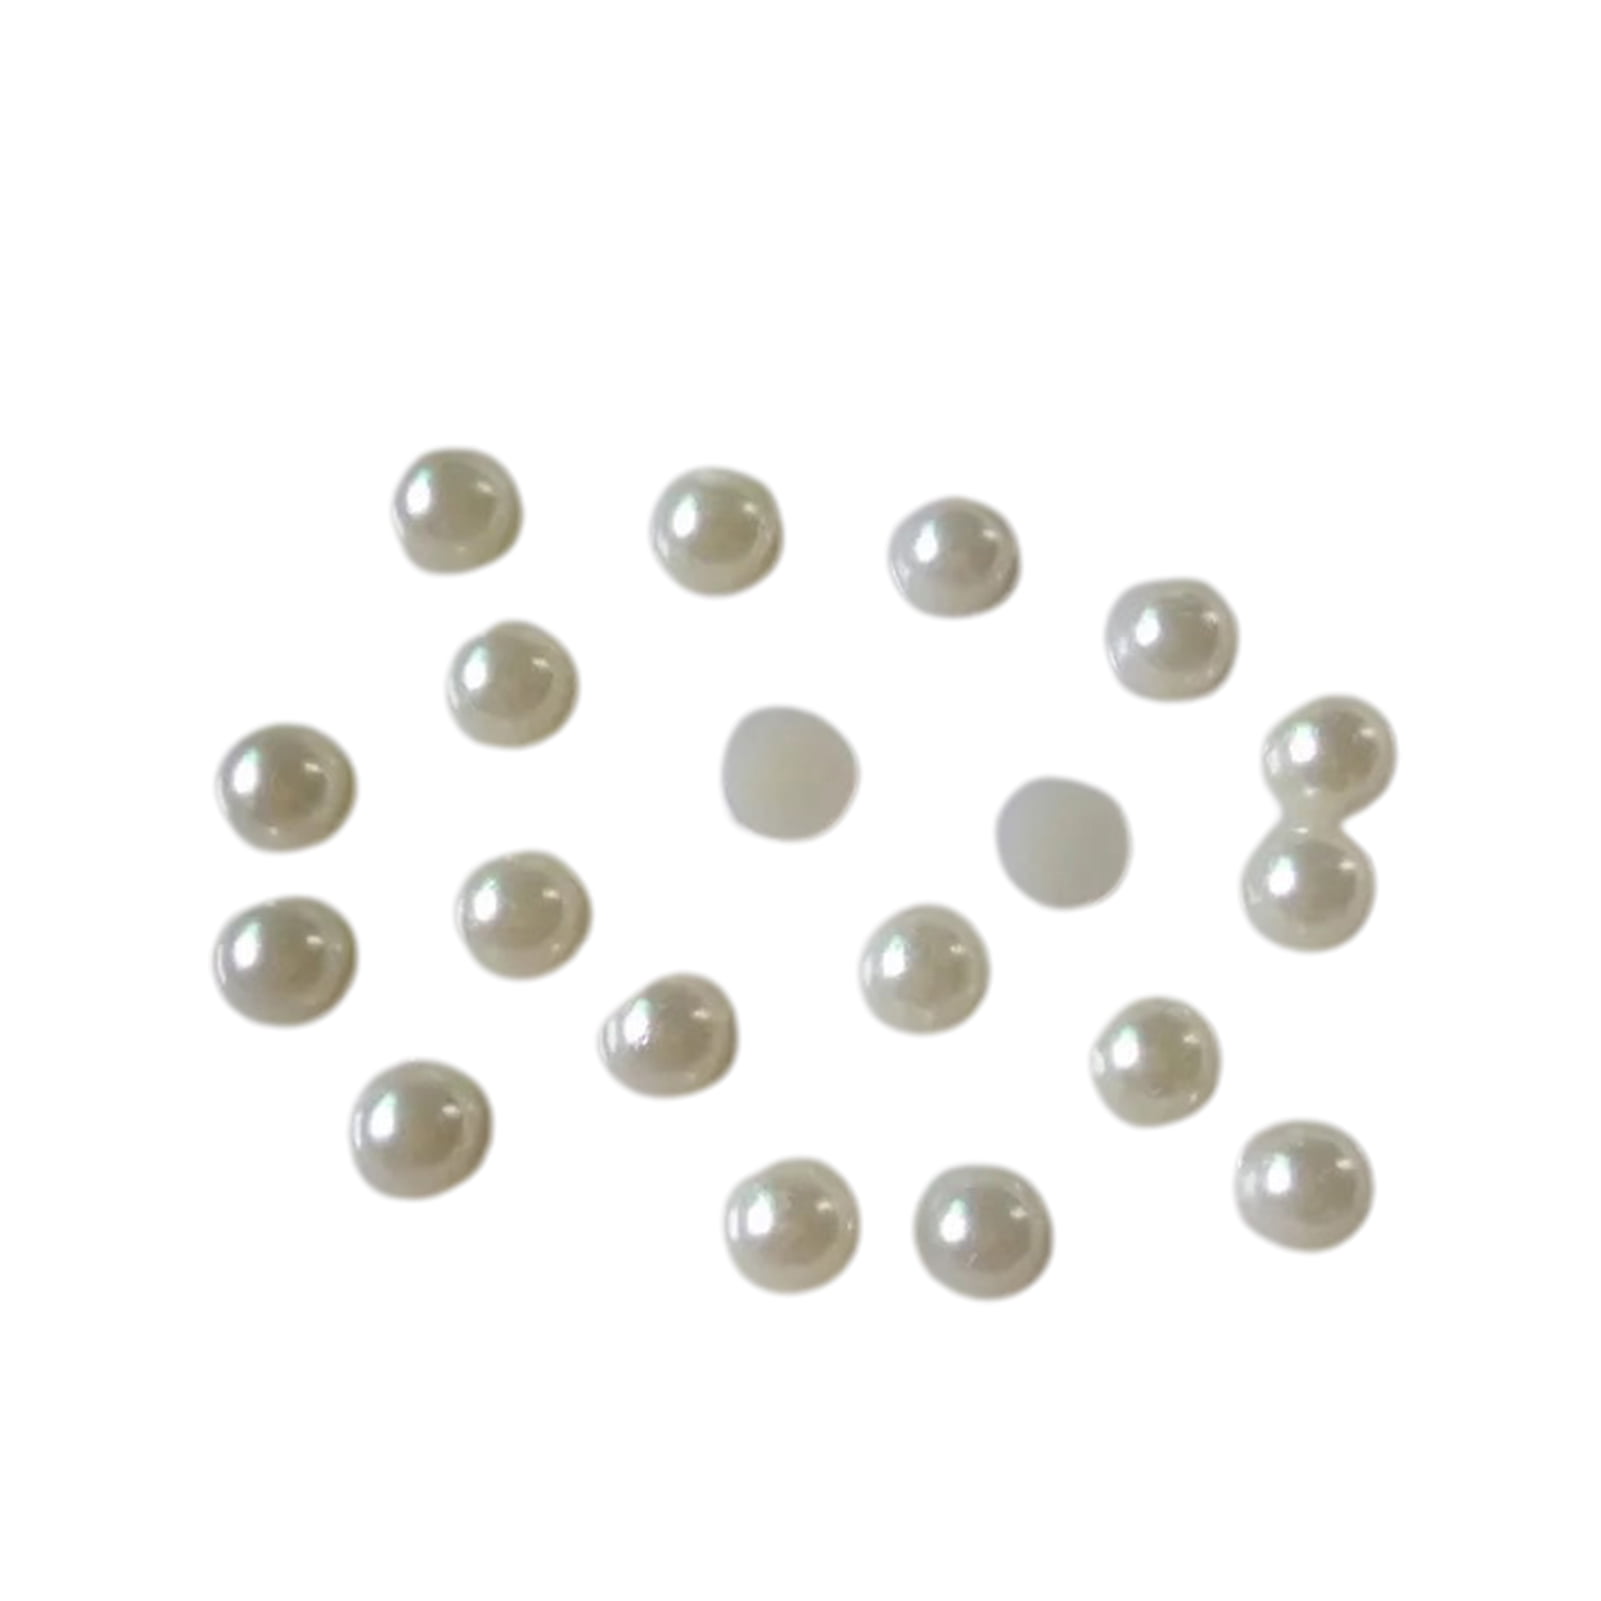 Hesroicy 1 Bag Nail Art Faux Pearls Three-dimensional Flatback